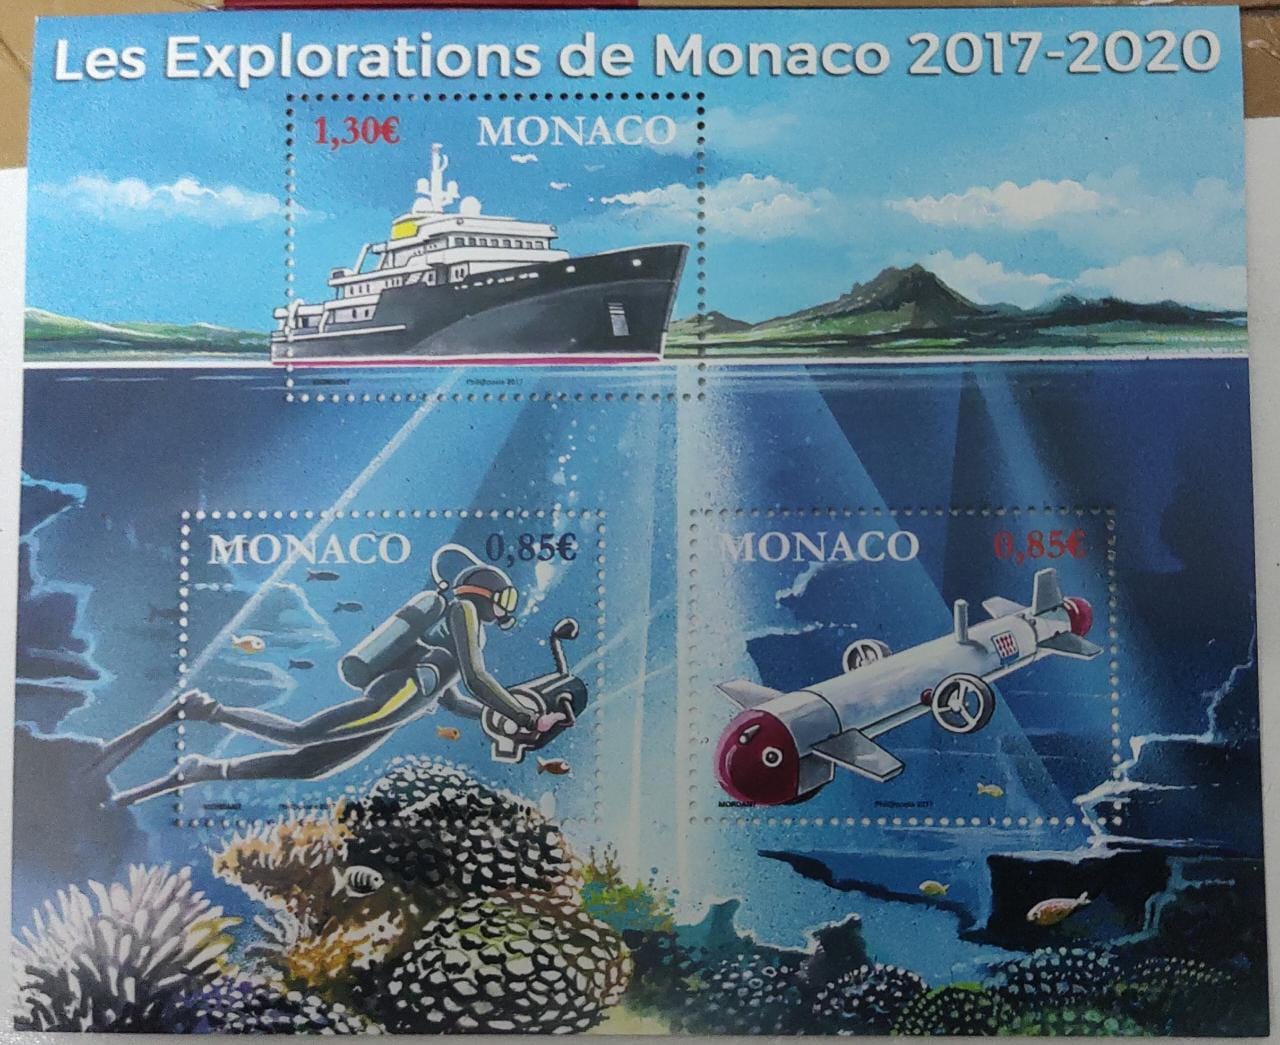 2017 Monaco sea explorations.